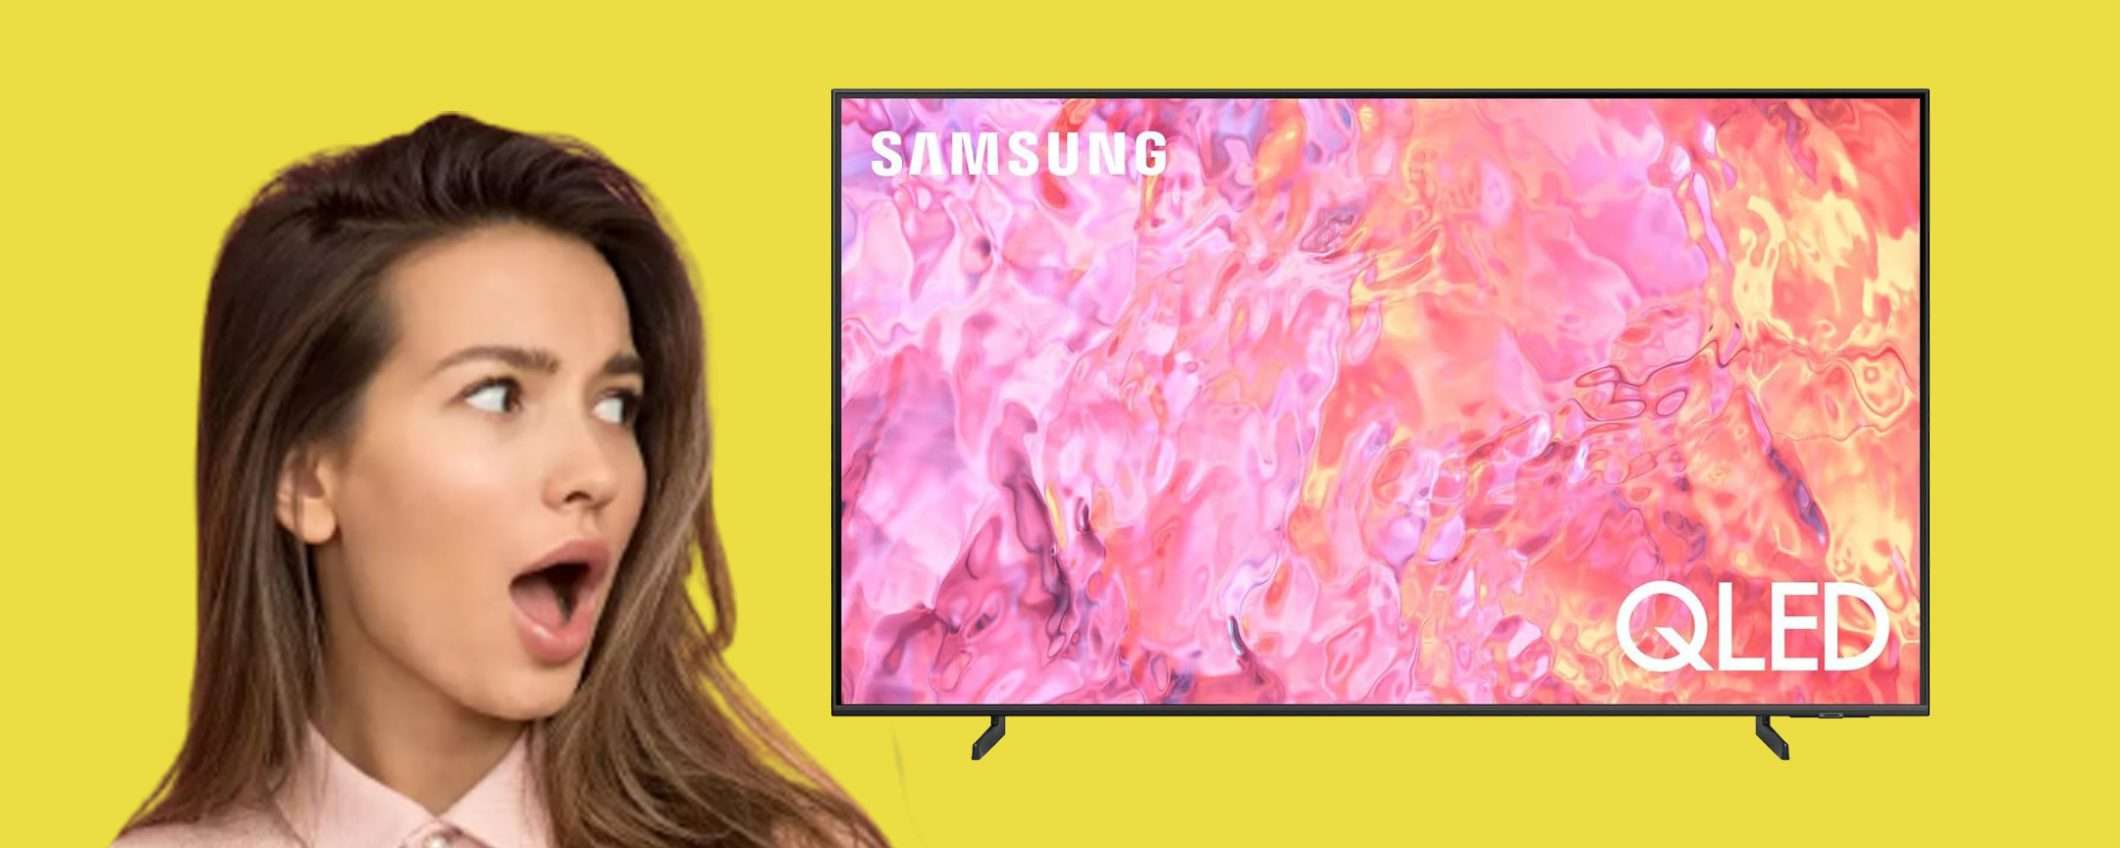 Smart TV Samsung QLED 4K da 65